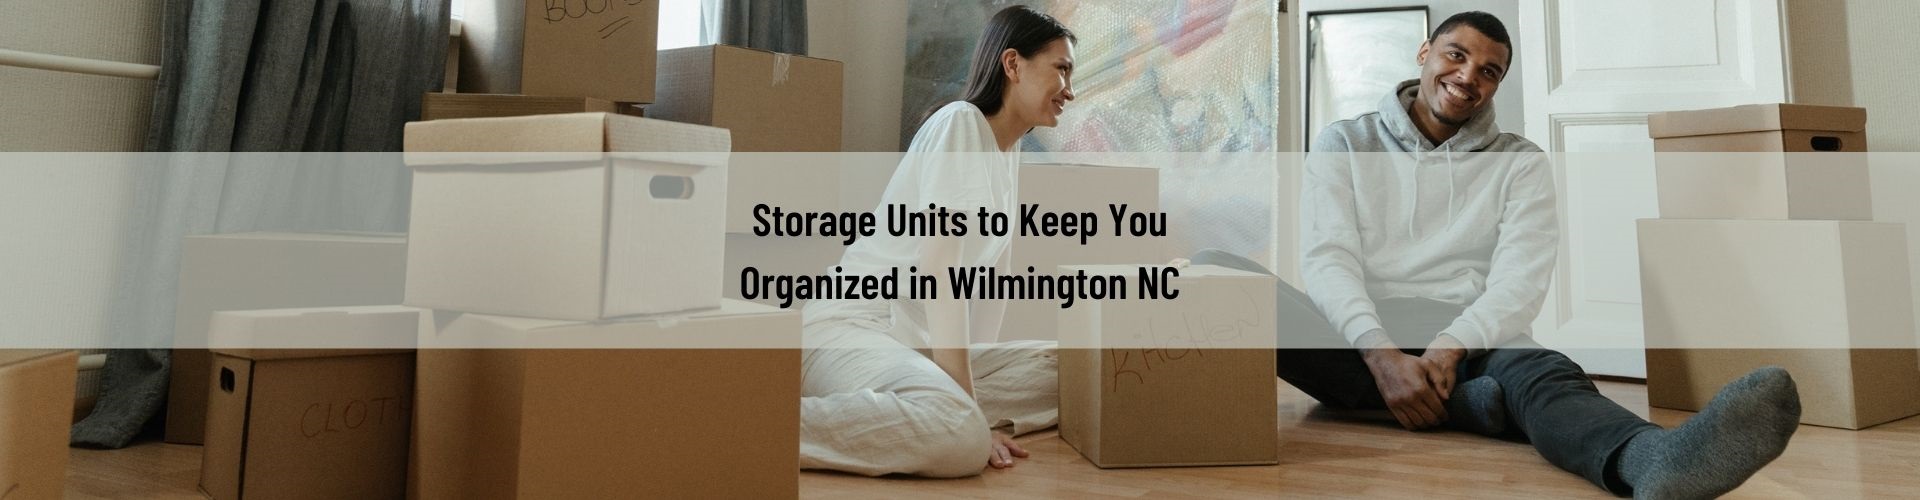 Storage Units in Wilmington NC